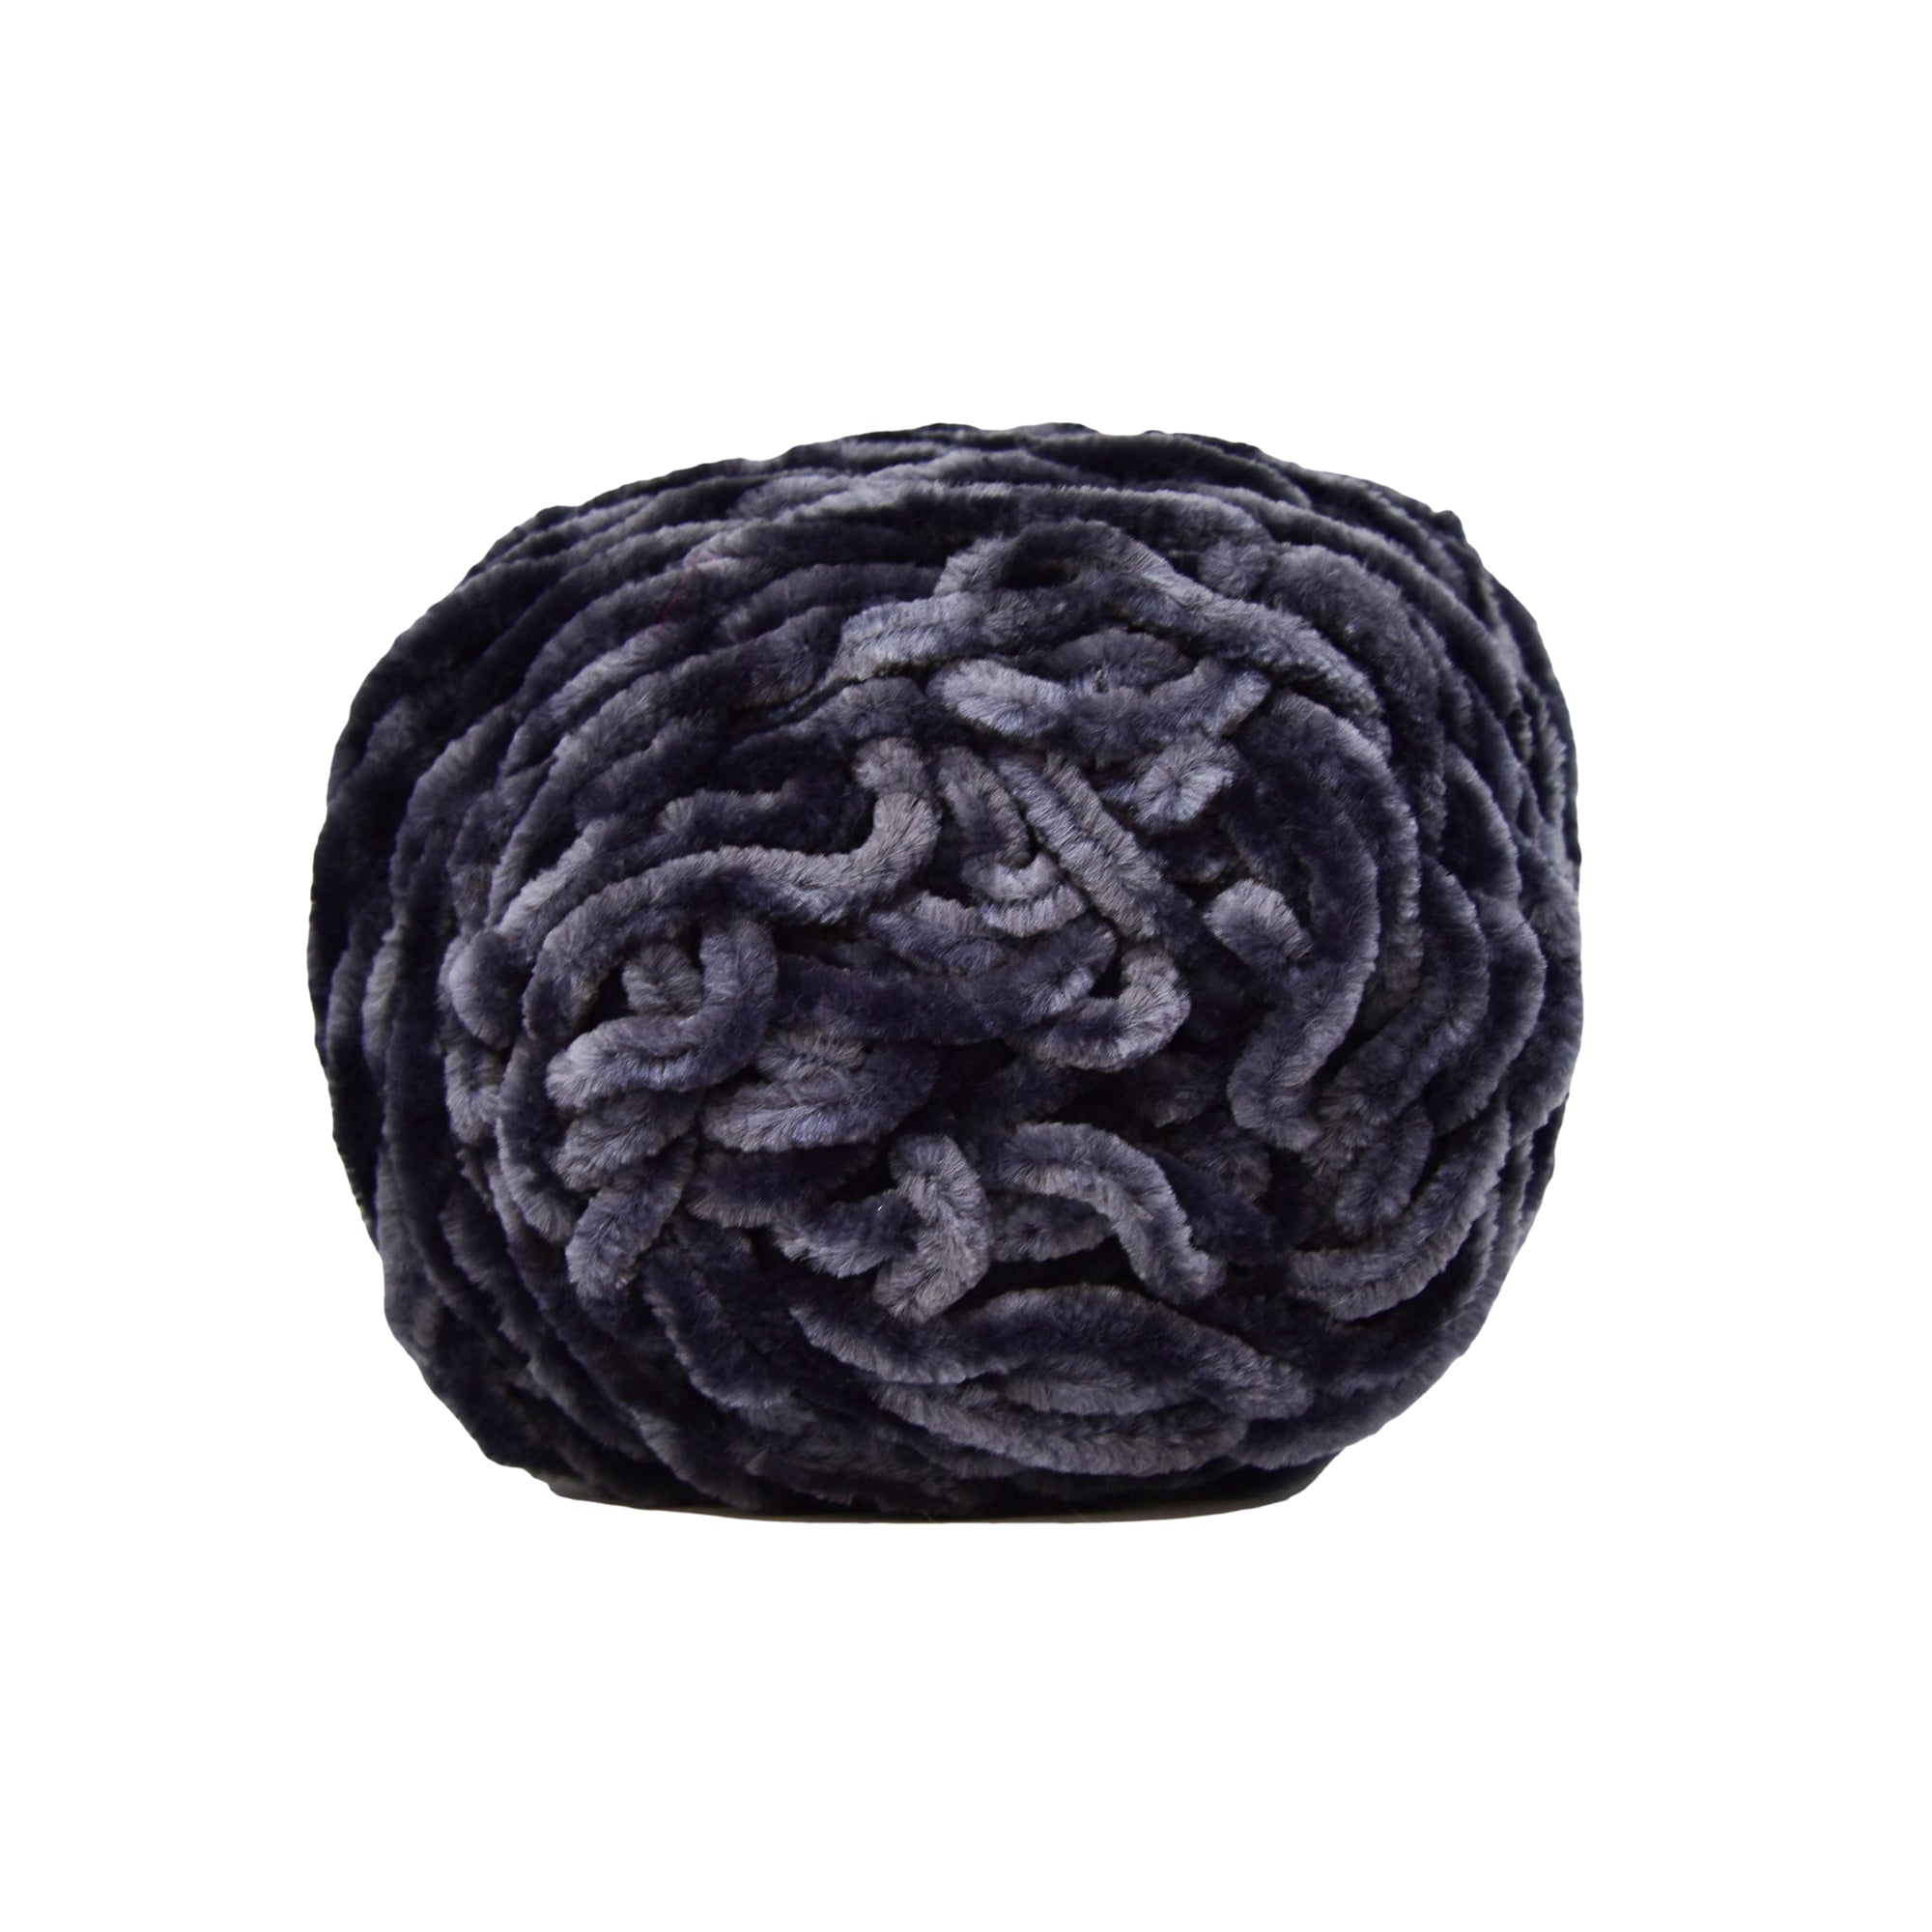 Lana Daska No.272 - Beige oscuro - Ovillo lana gruesa de invierno